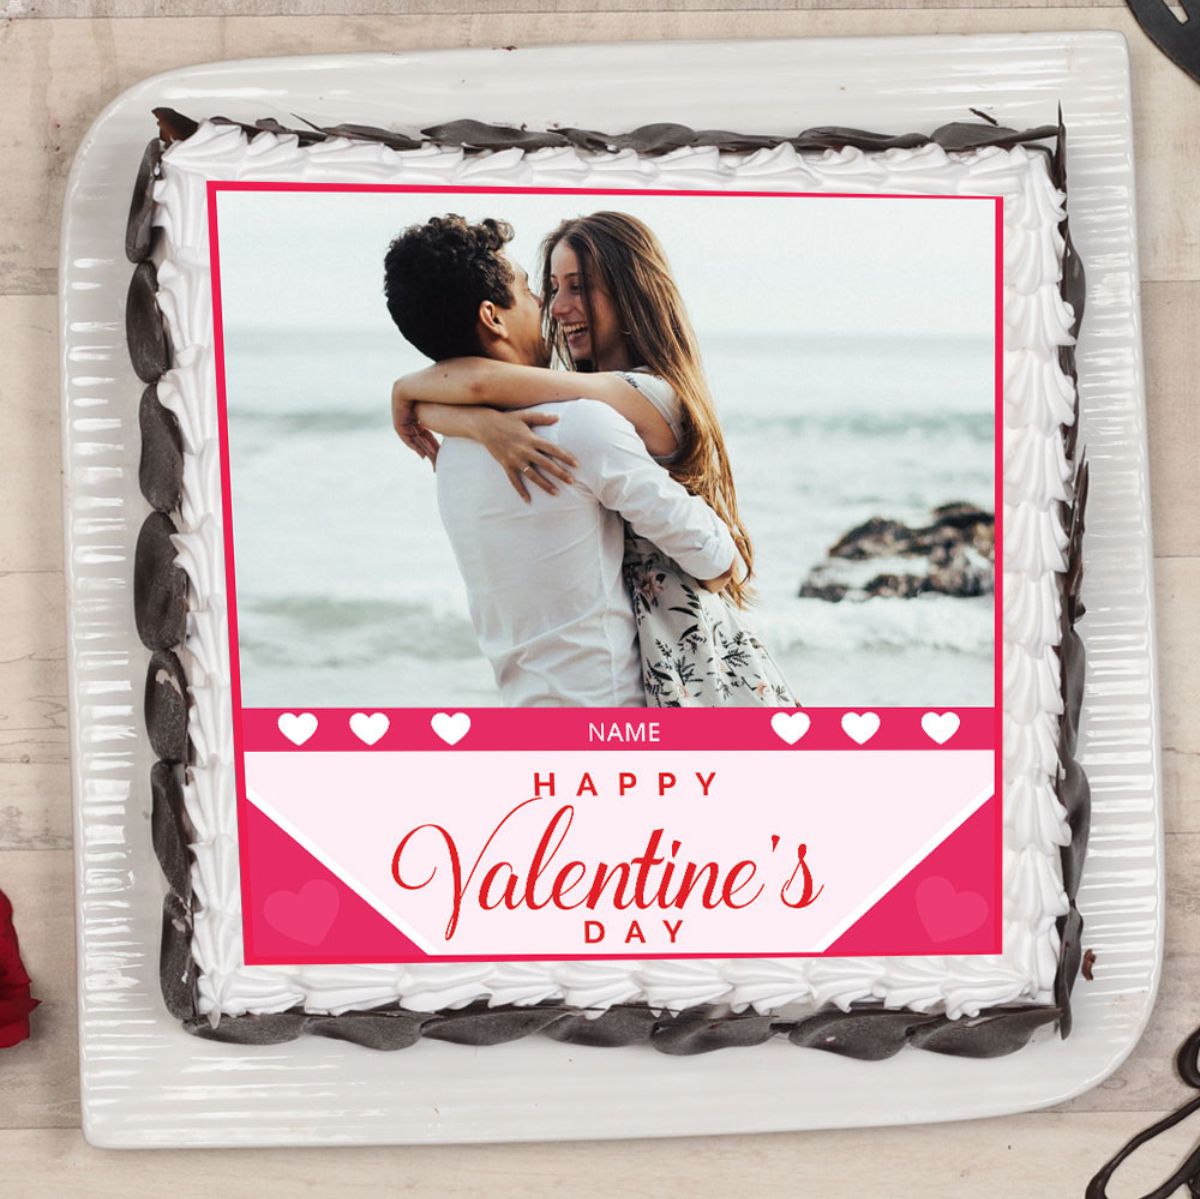 Happy Valentine's Day Photo Cake